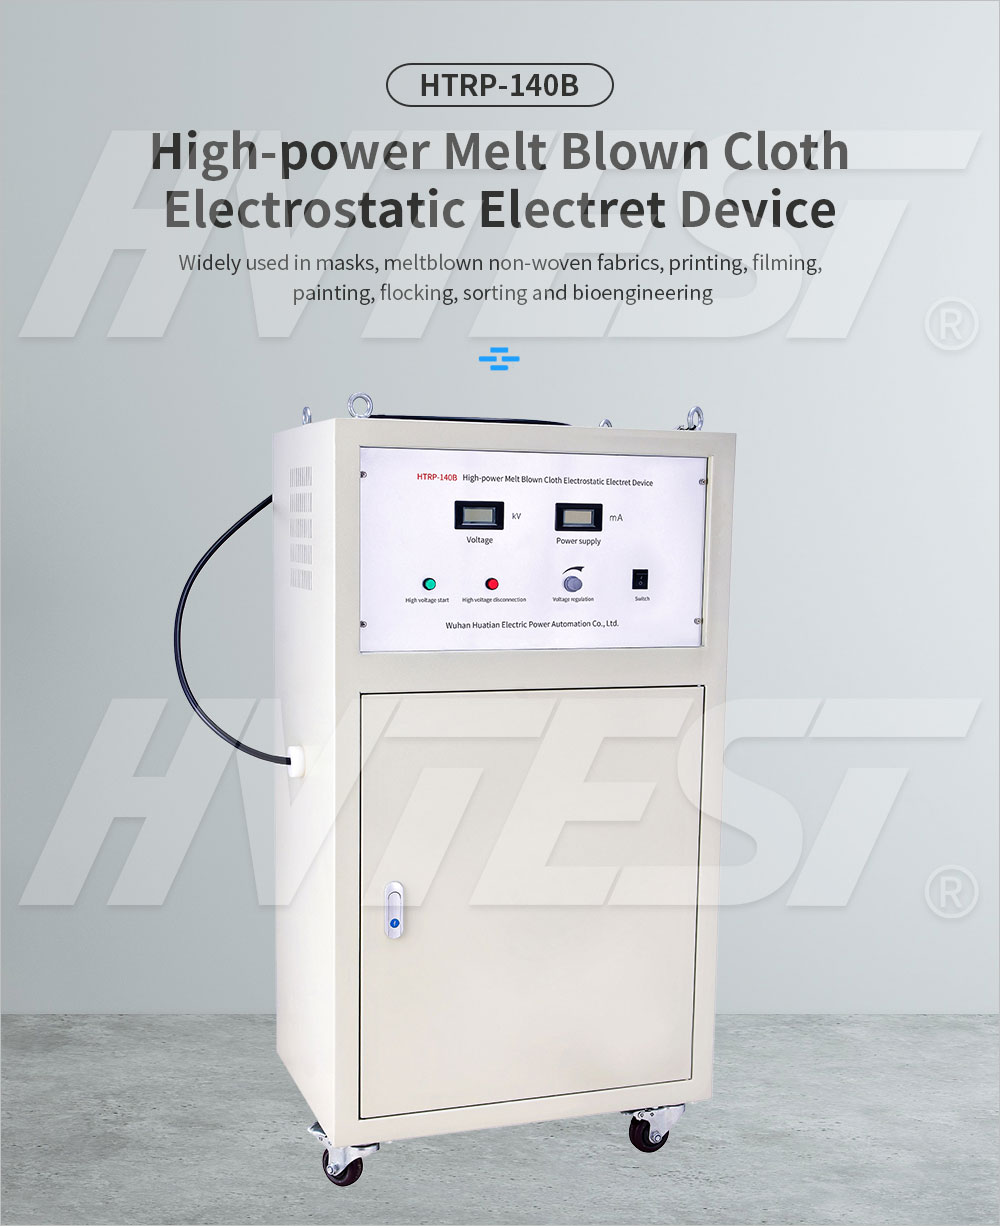 High-power Melt Blown Cloth Electrostatic Electret Device